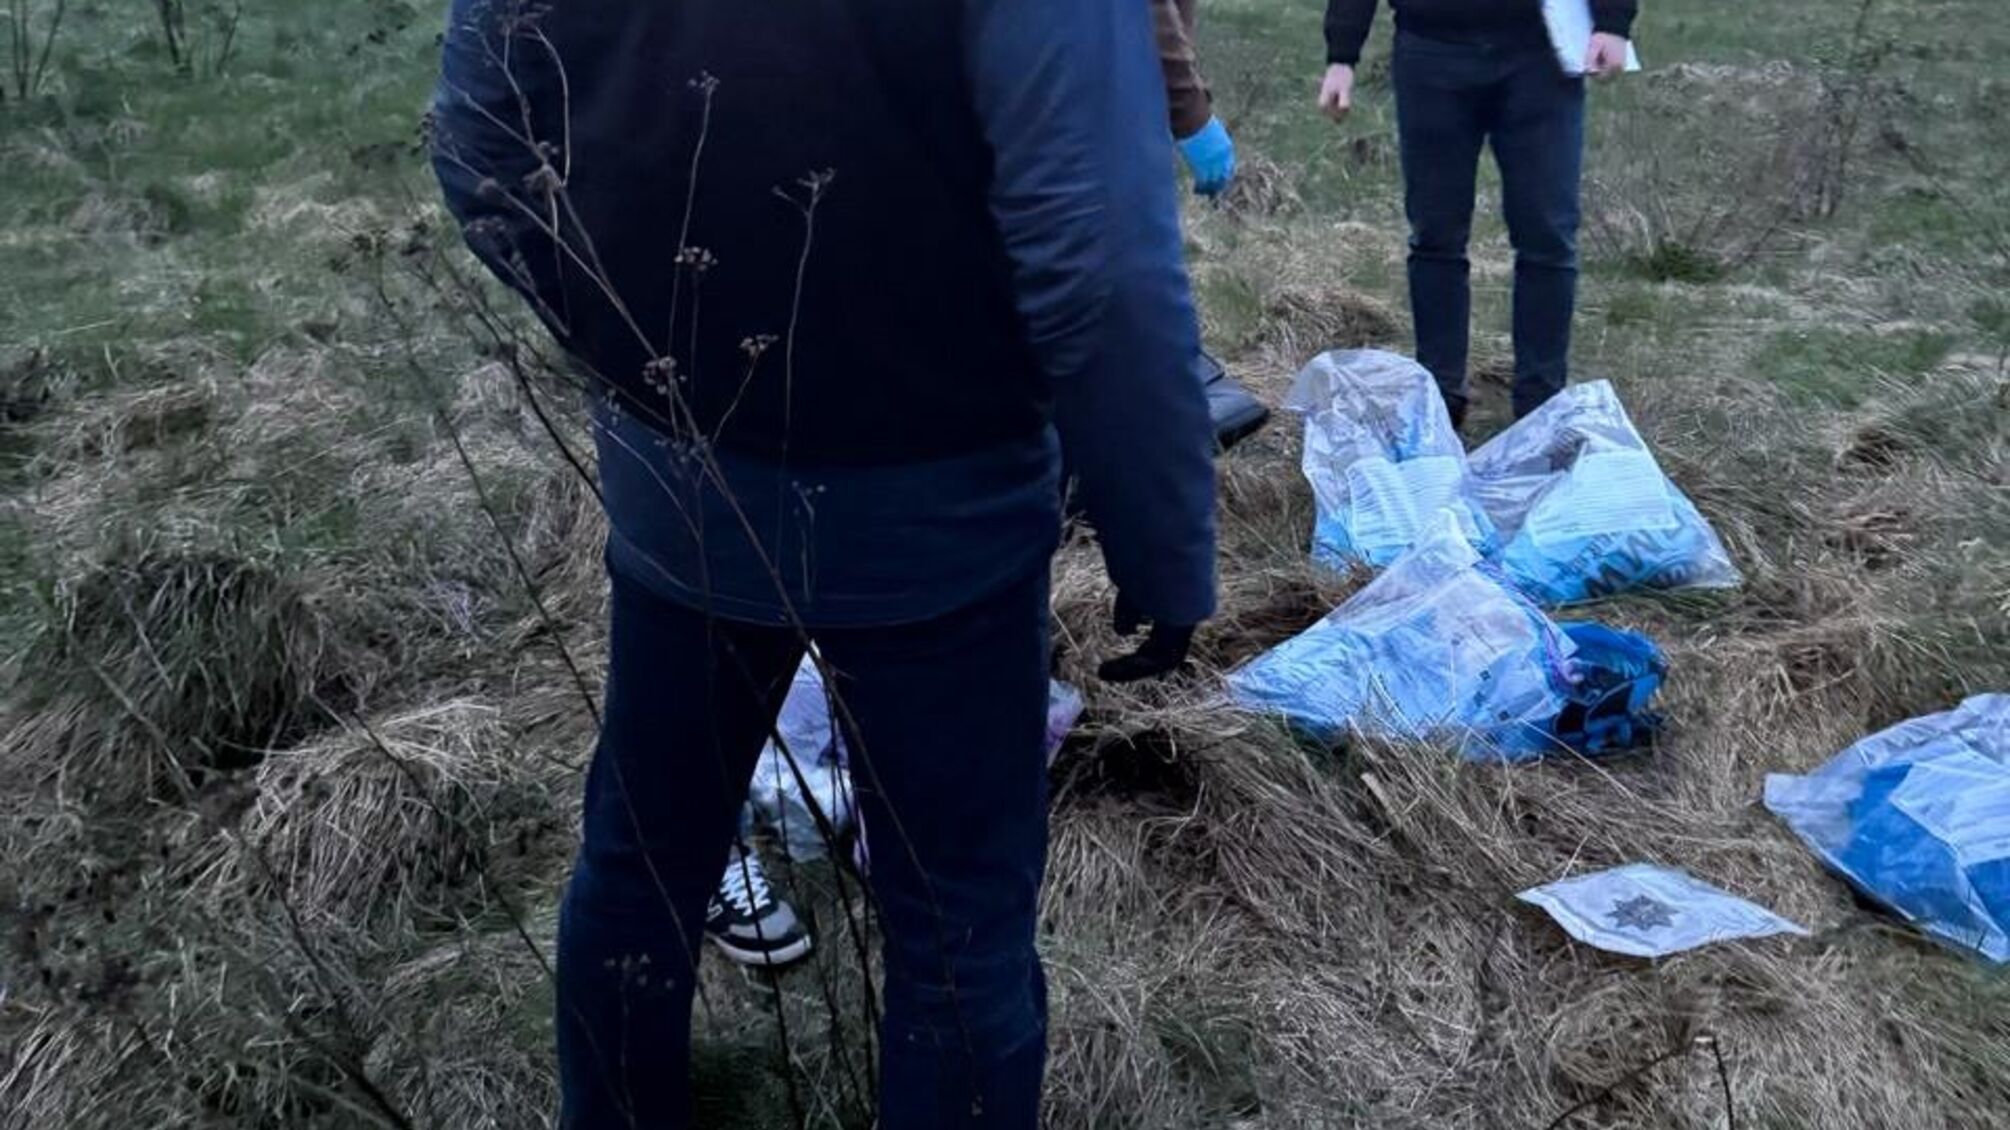 Изъяли амфетамина на 25 млн грн: на Прикарпатье полицейские задержали наркогруппировку